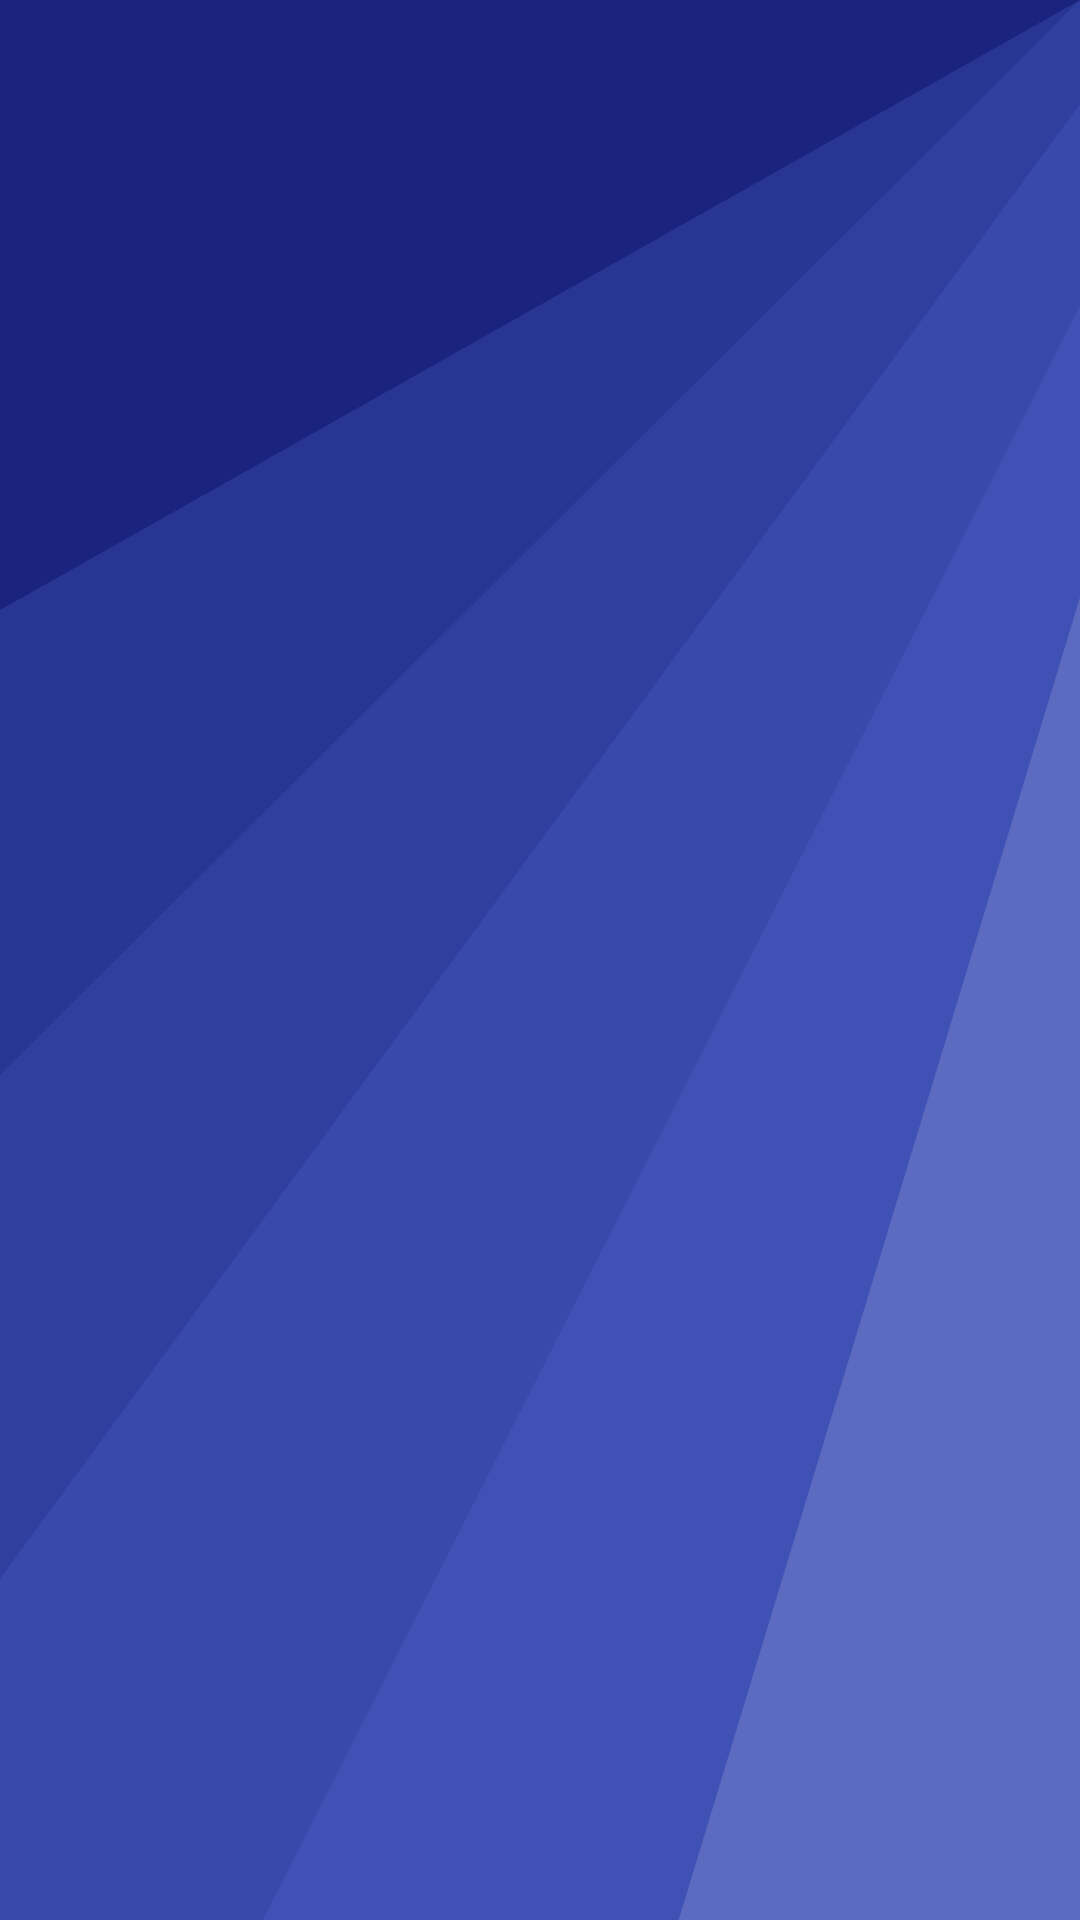 fondos de pantalla,azul cobalto,azul,tiempo de día,azul eléctrico,violeta